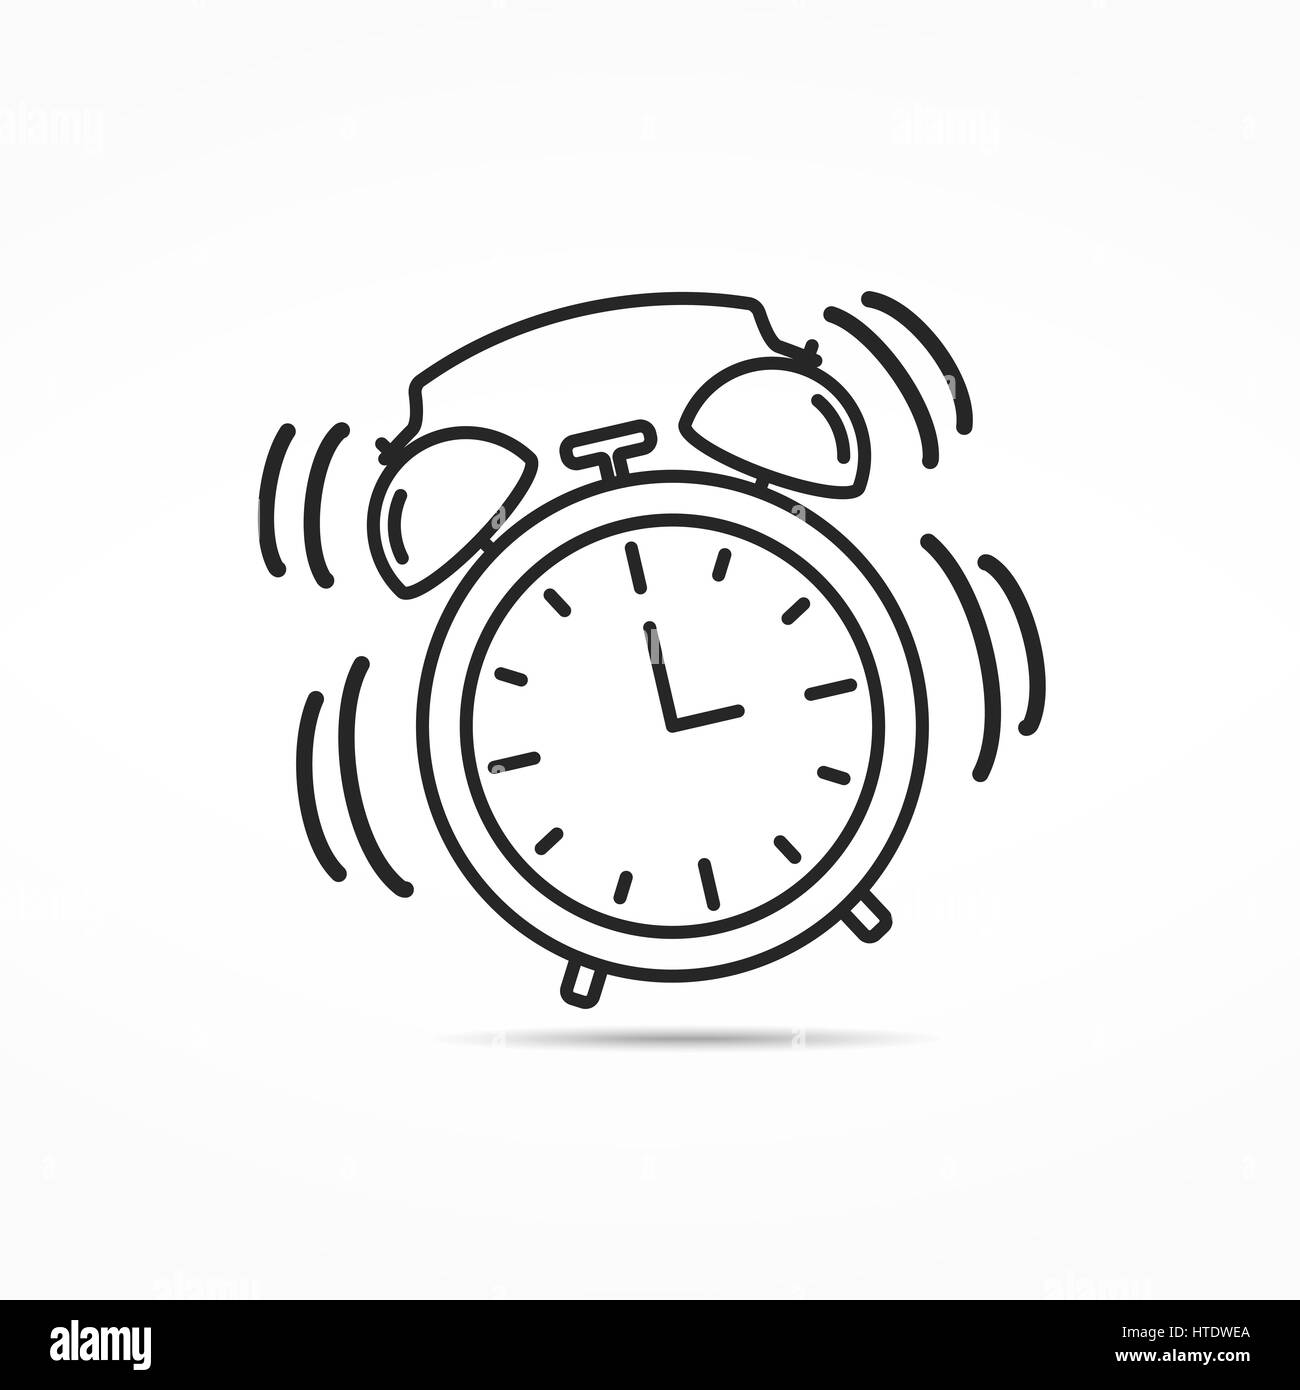 Alarm clock minimal line icon Stock Photo - Alamy